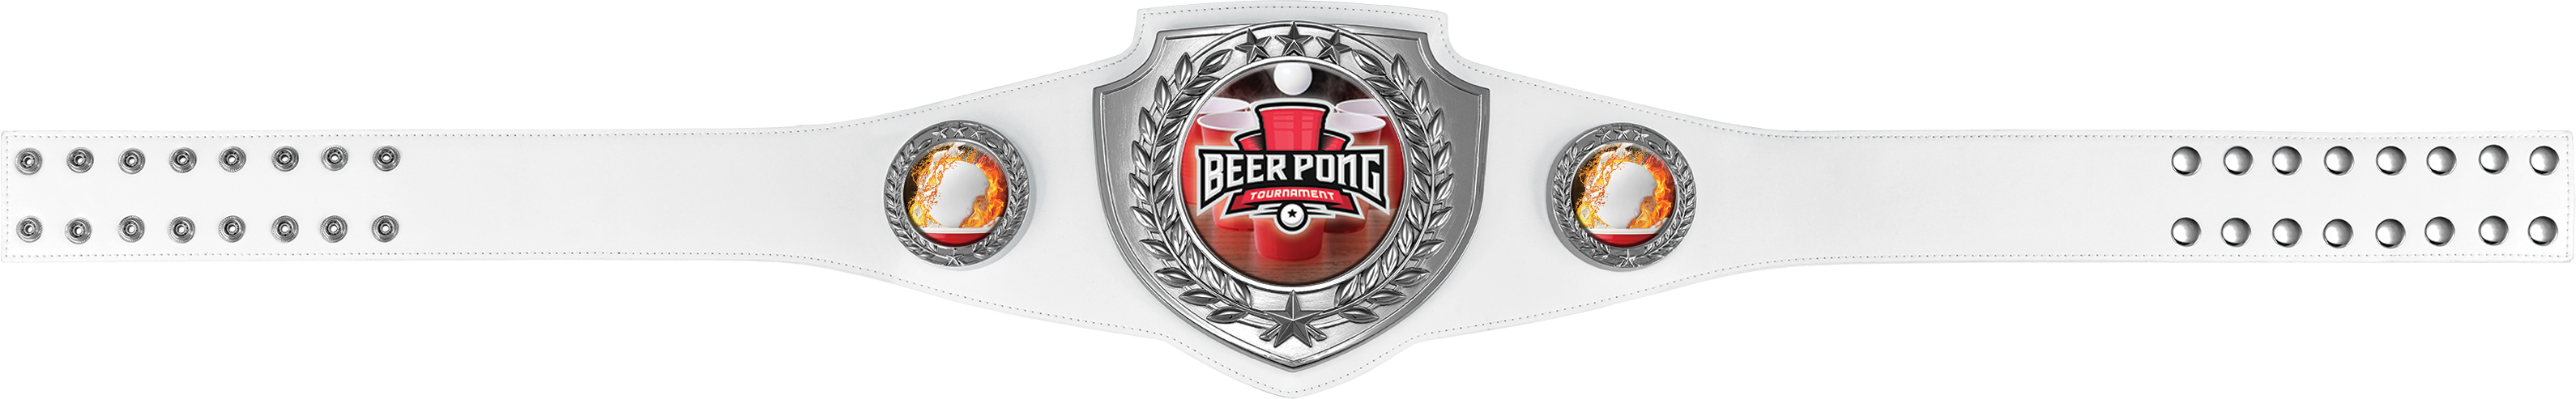 Beer Pong Champion Shield Award Belt